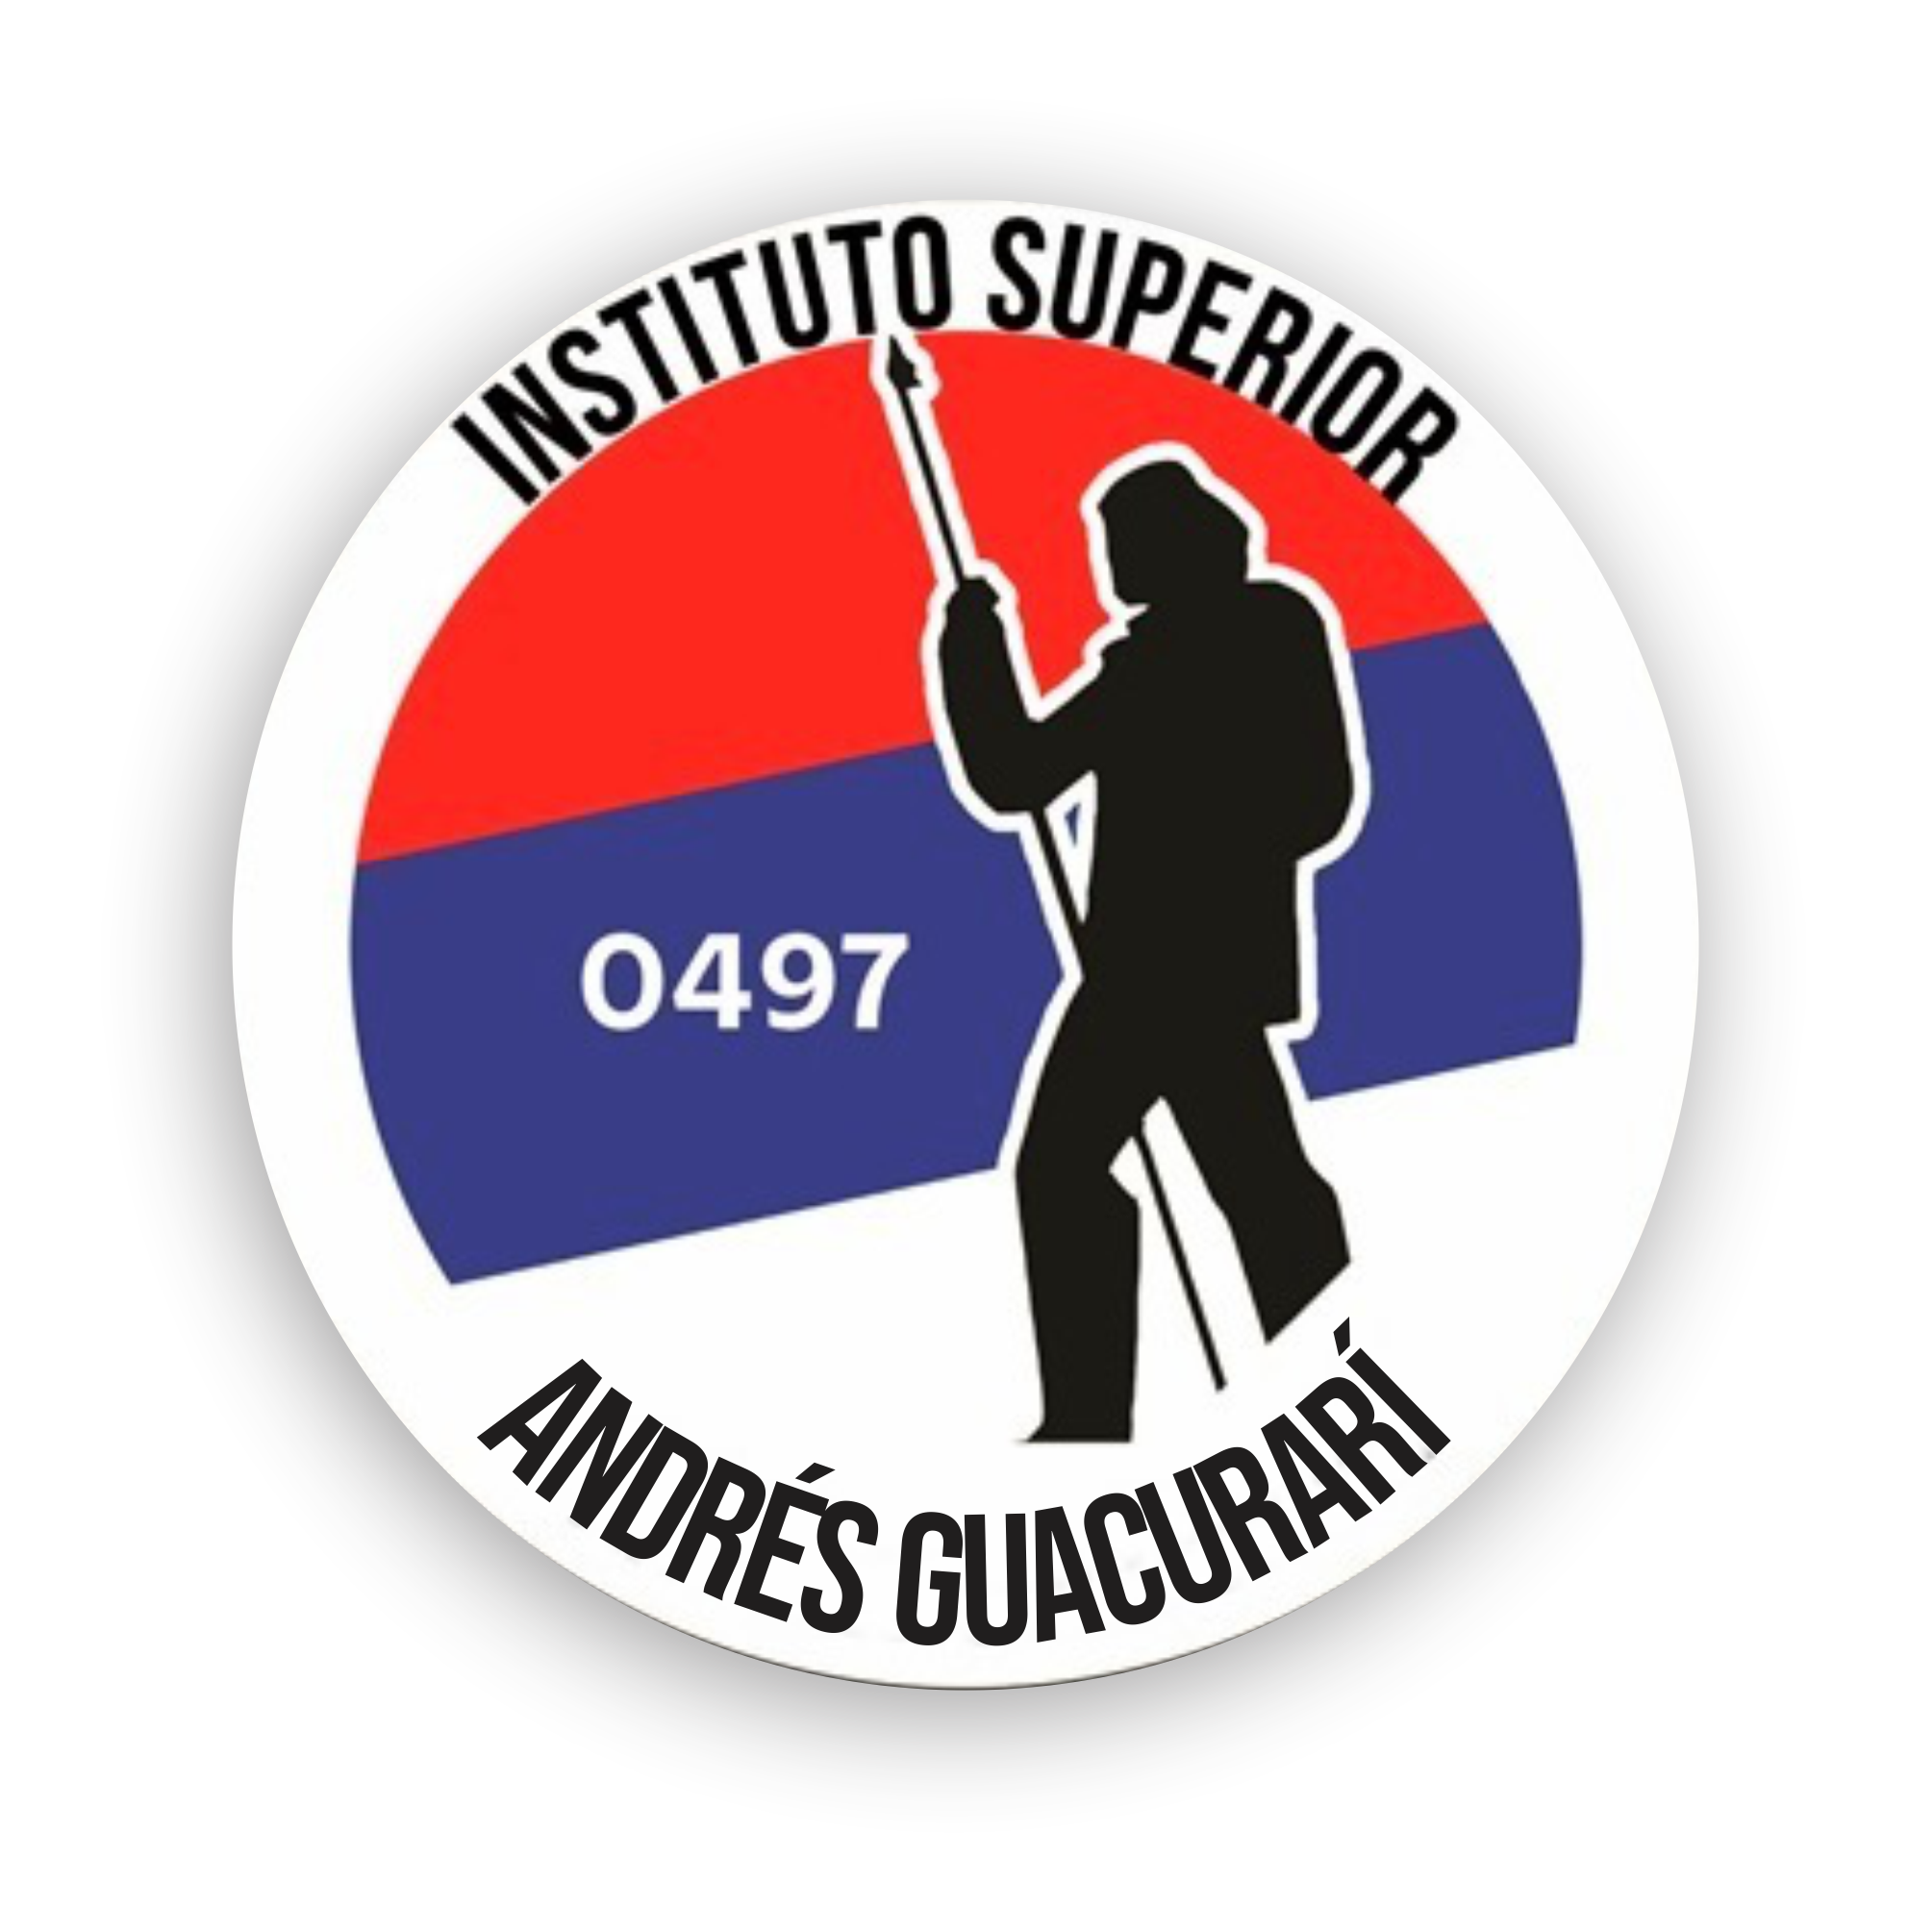 Instituto Superior Andrés Guacurarí